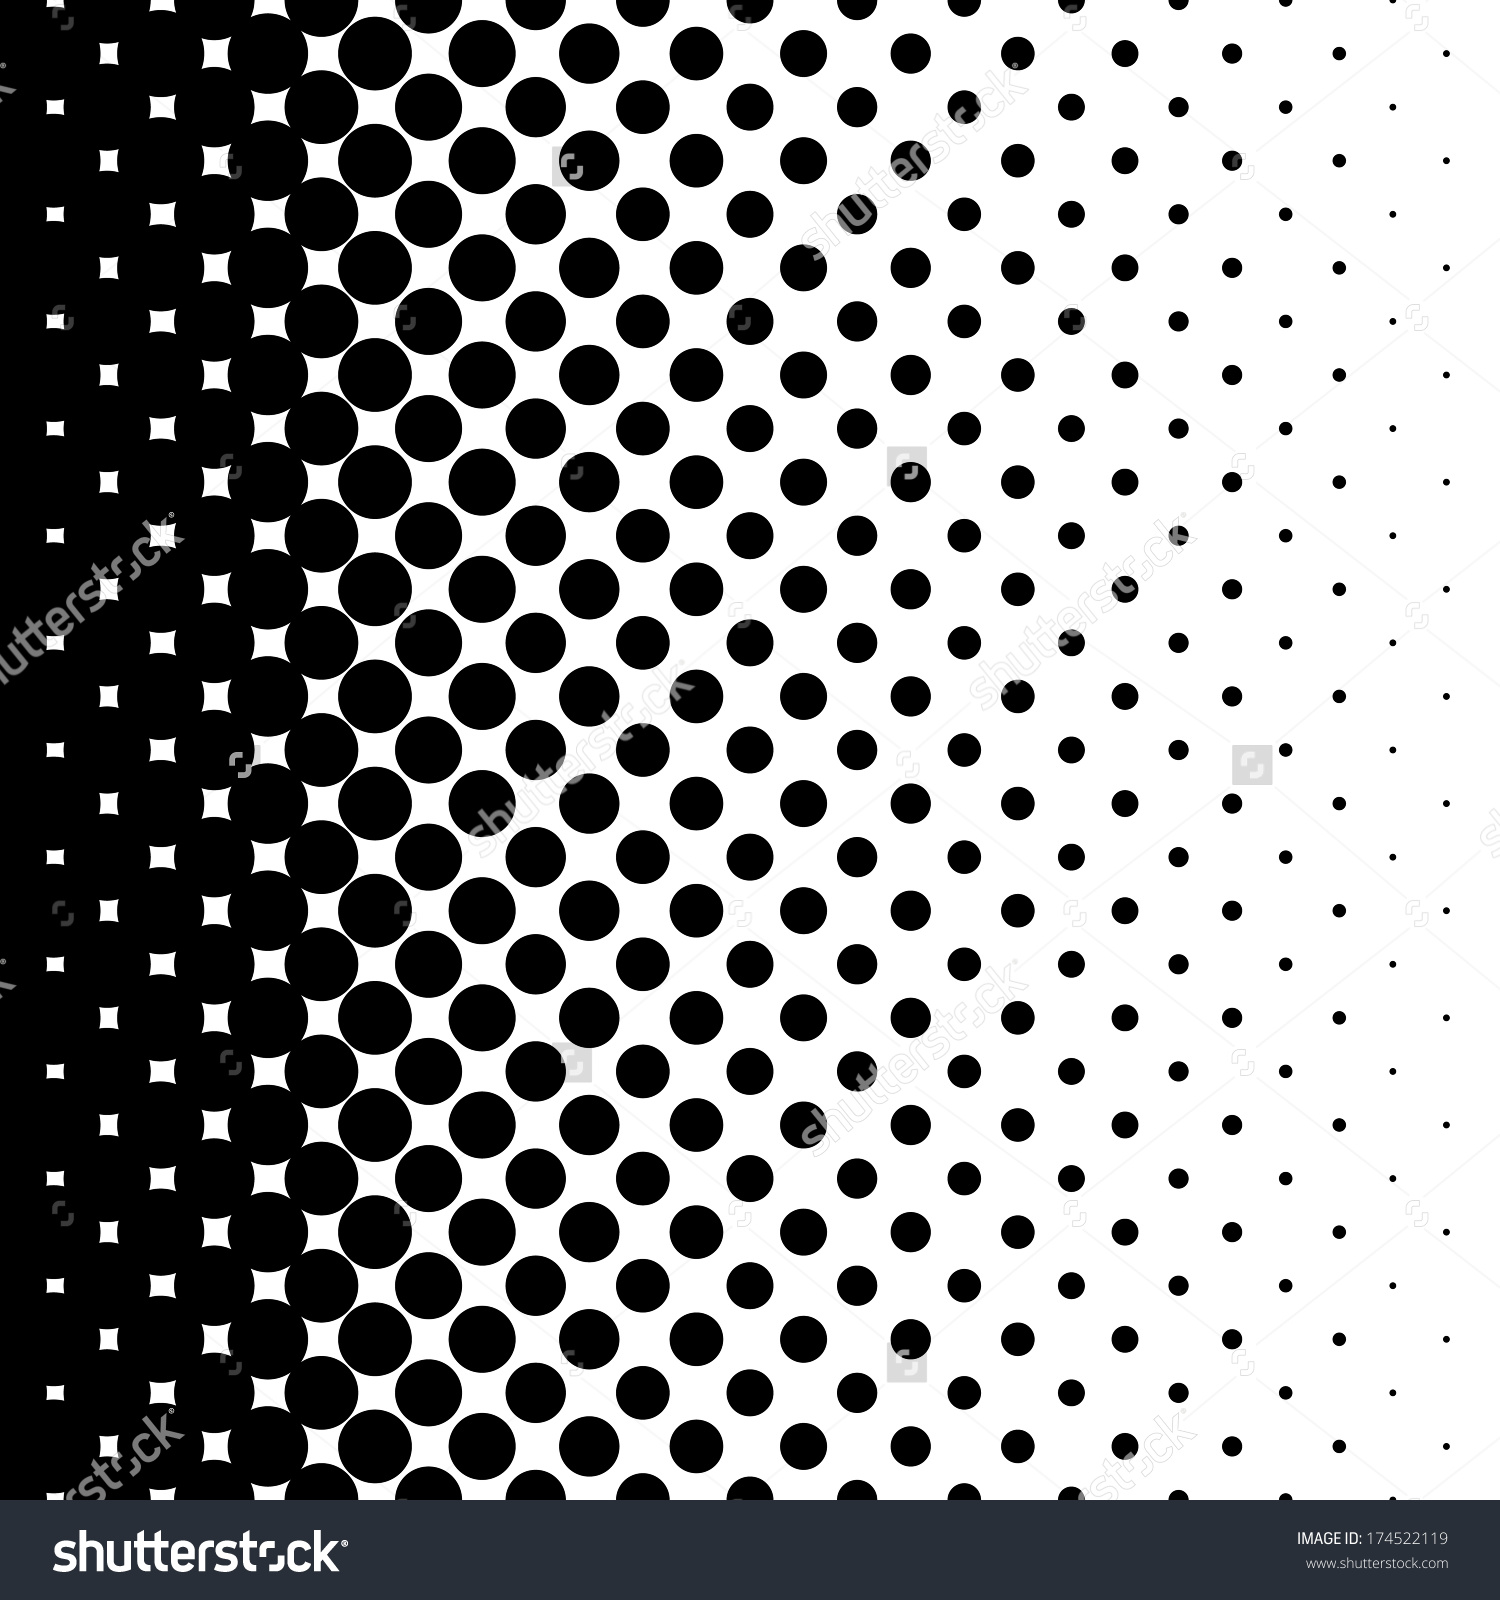 Dots HD wallpapers, Desktop wallpaper - most viewed